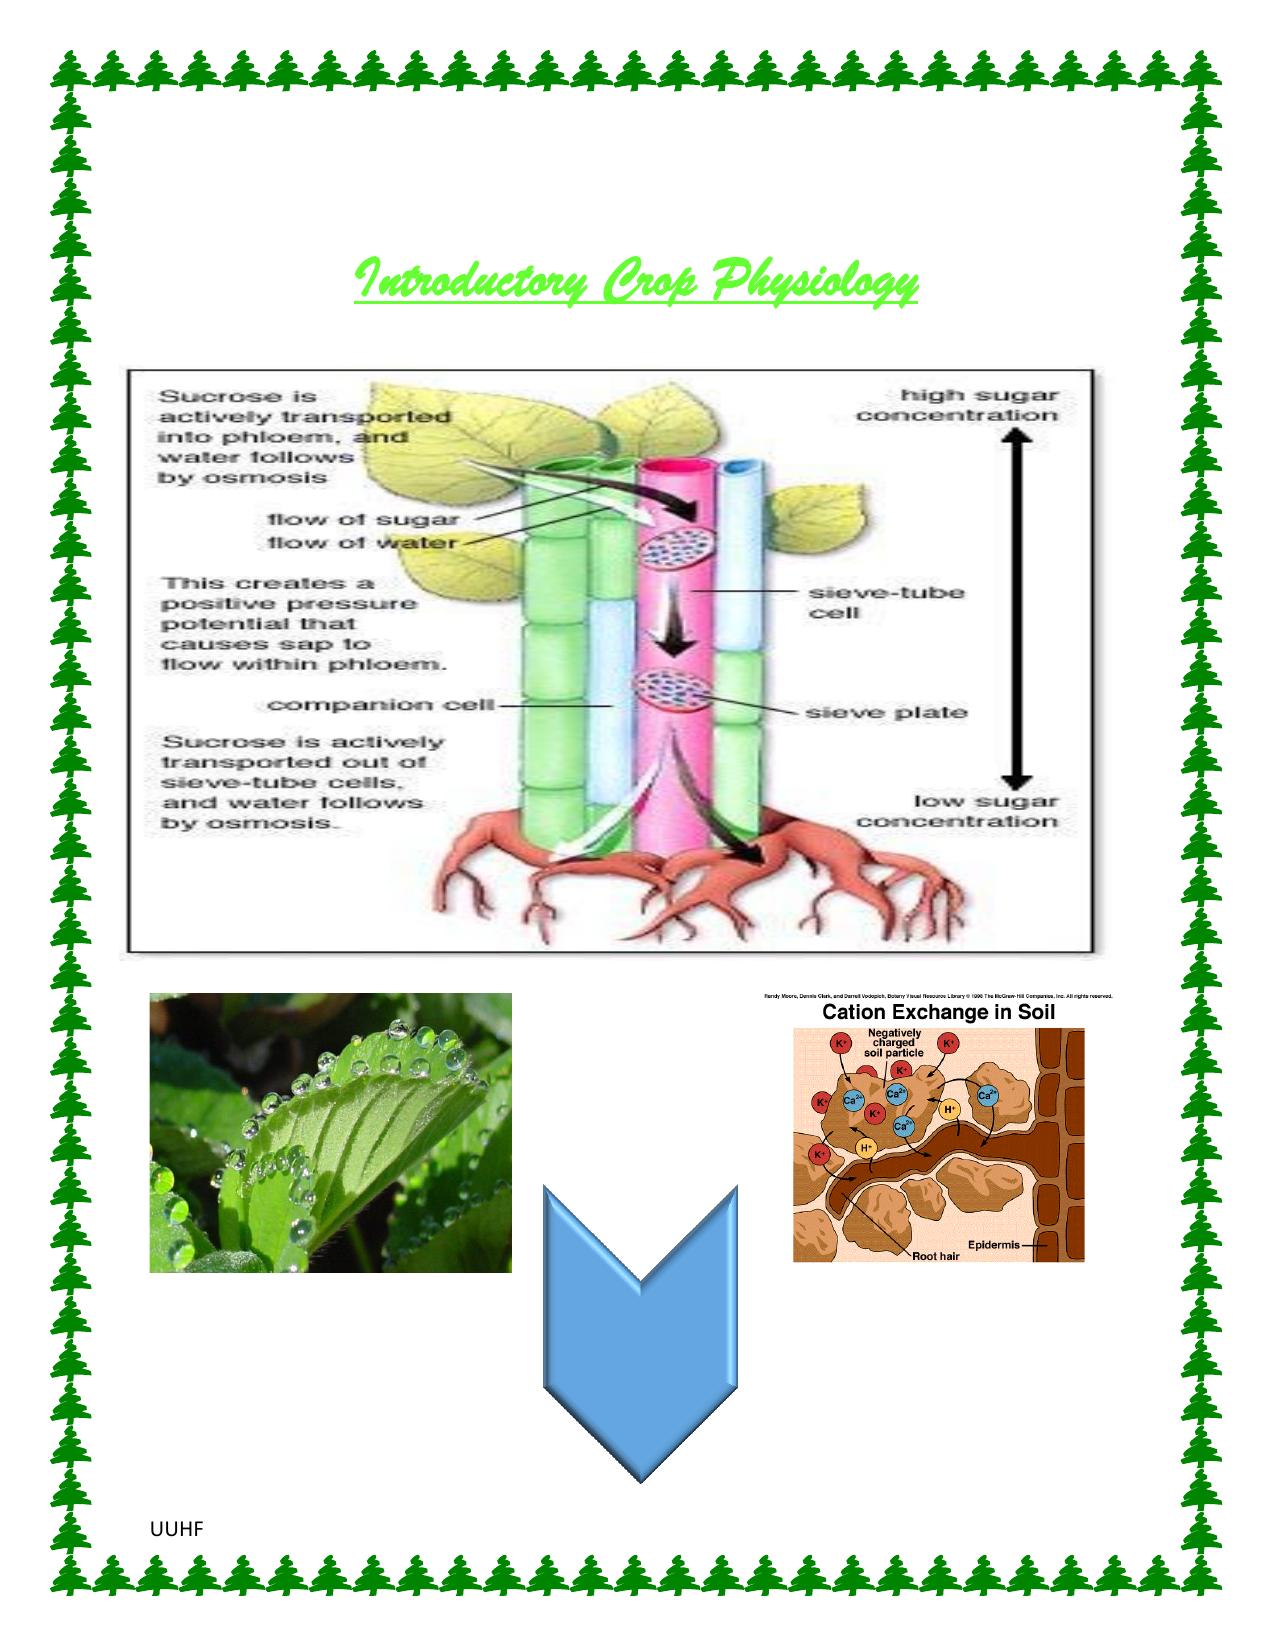 Crop physiology 2016